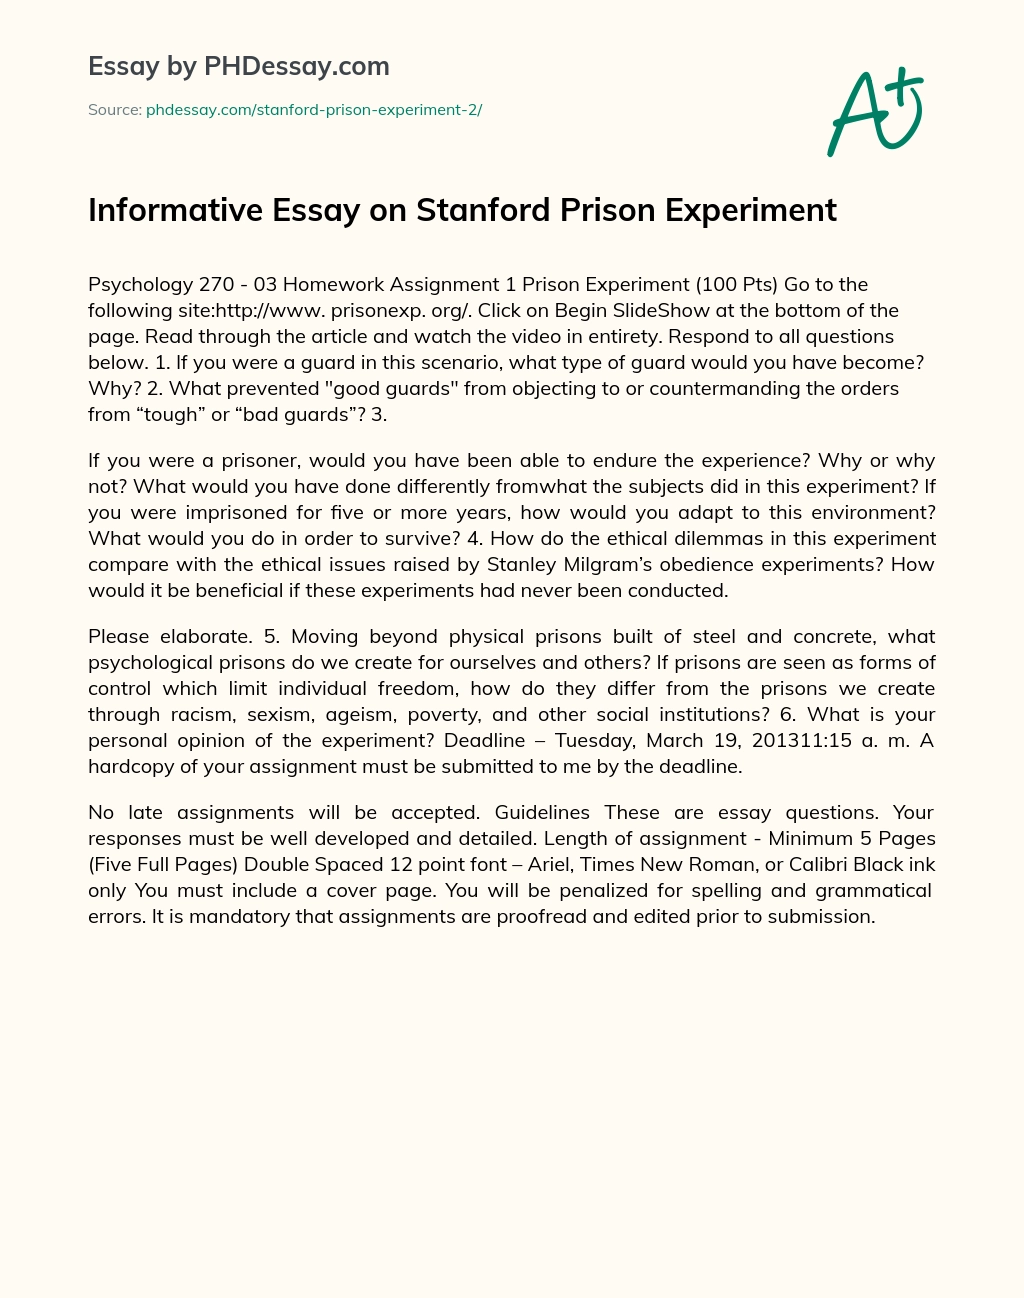 Informative Essay on Stanford Prison Experiment essay